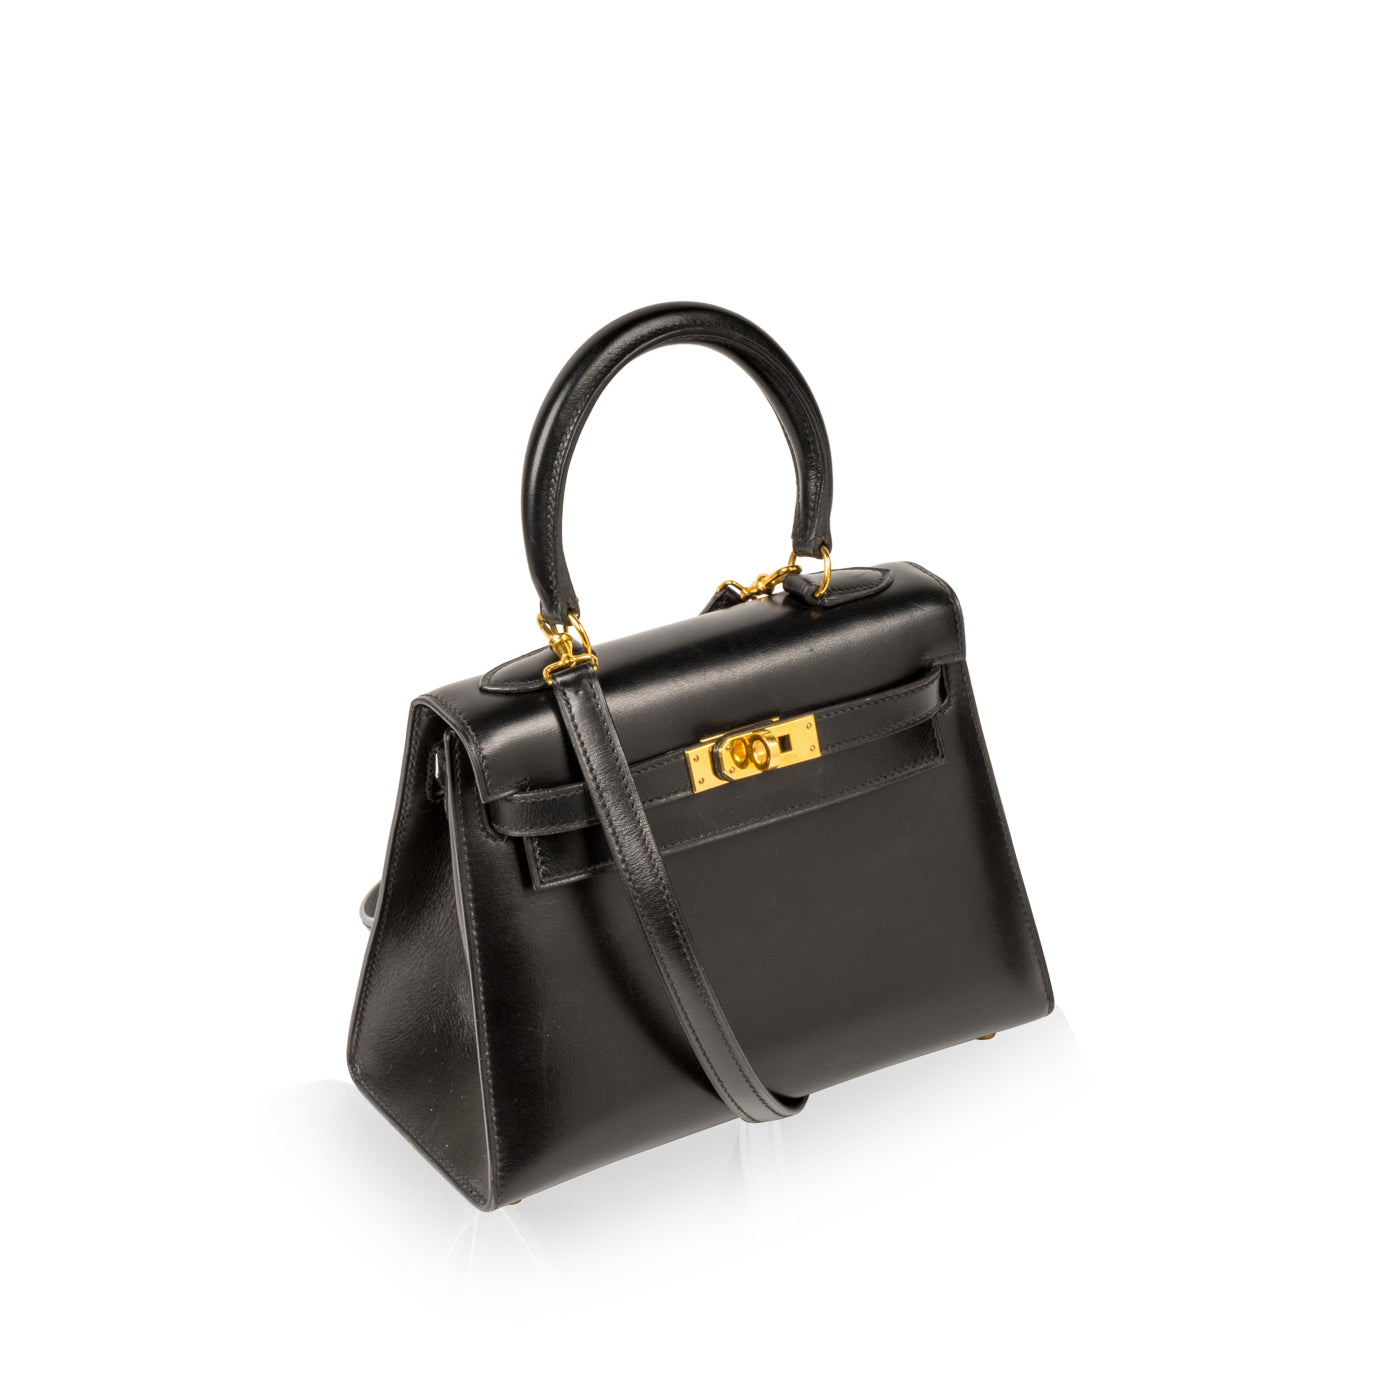 Hermès - Kelly 20cm - Box Calf Leather - Gold Hardware - Pre-Loved